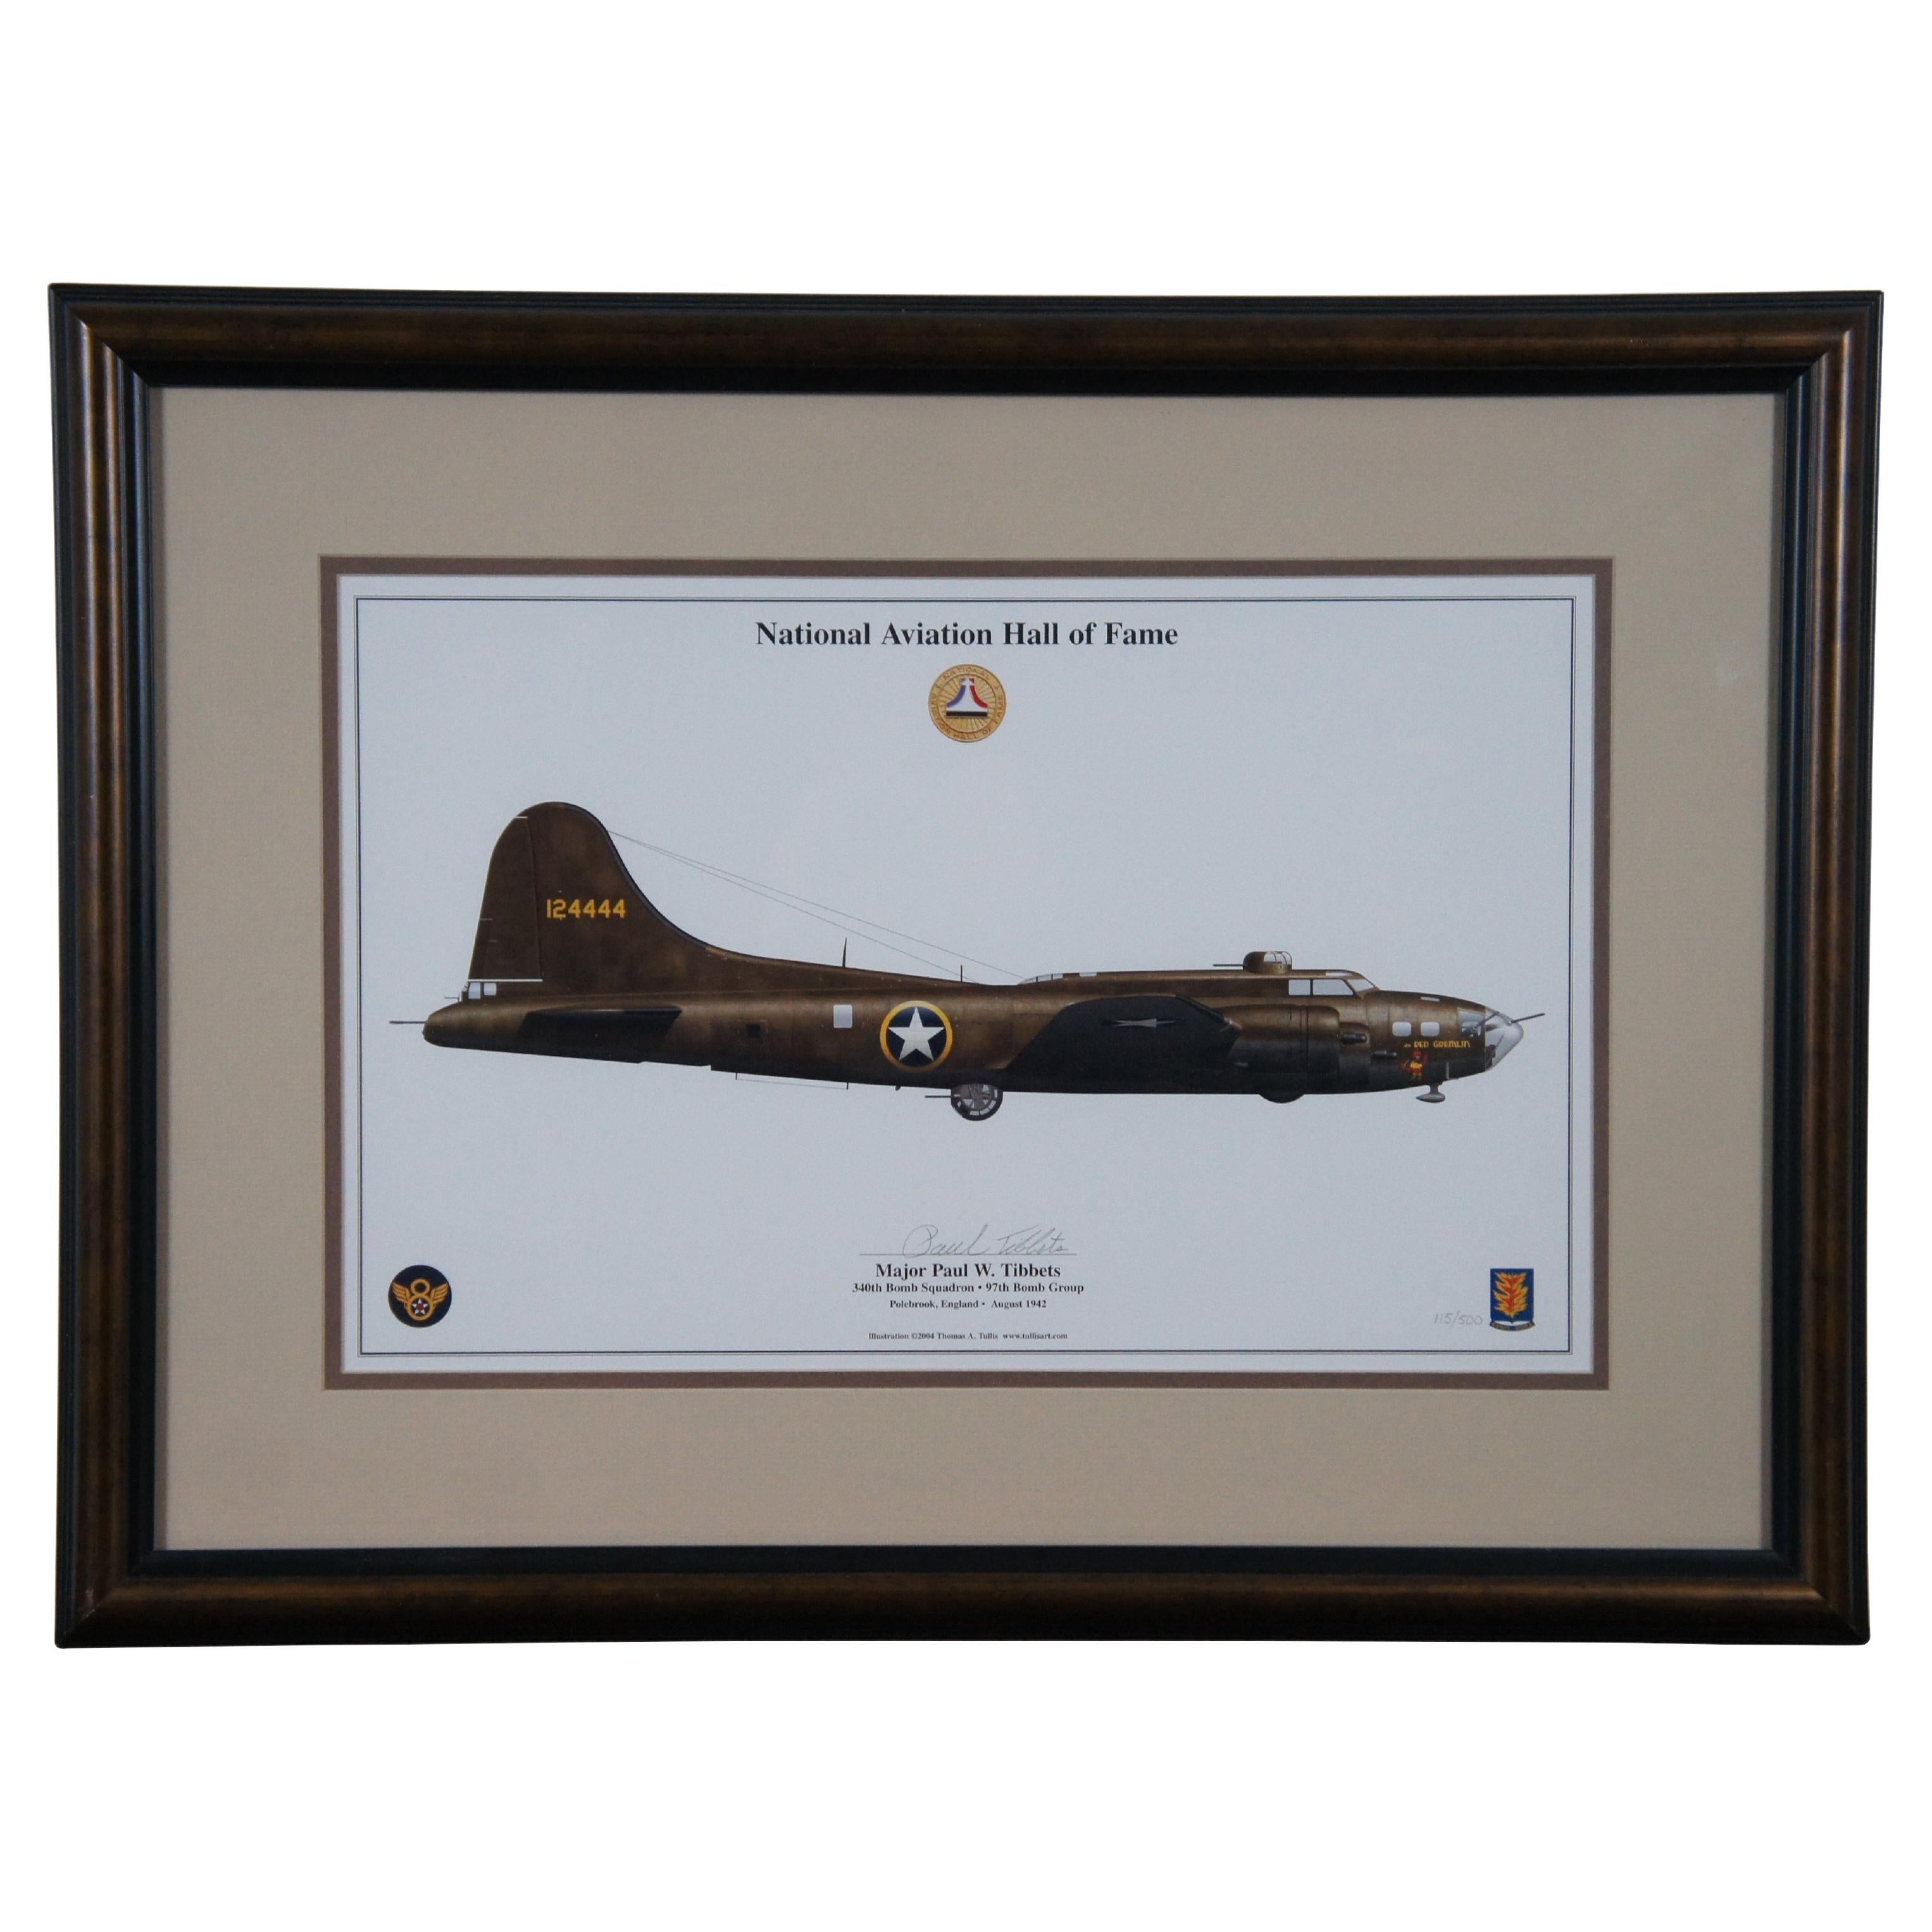 National Aviation Hall of Fame B-17 Gremlin Major Paul W. Tibbets Bomb Squad S&N